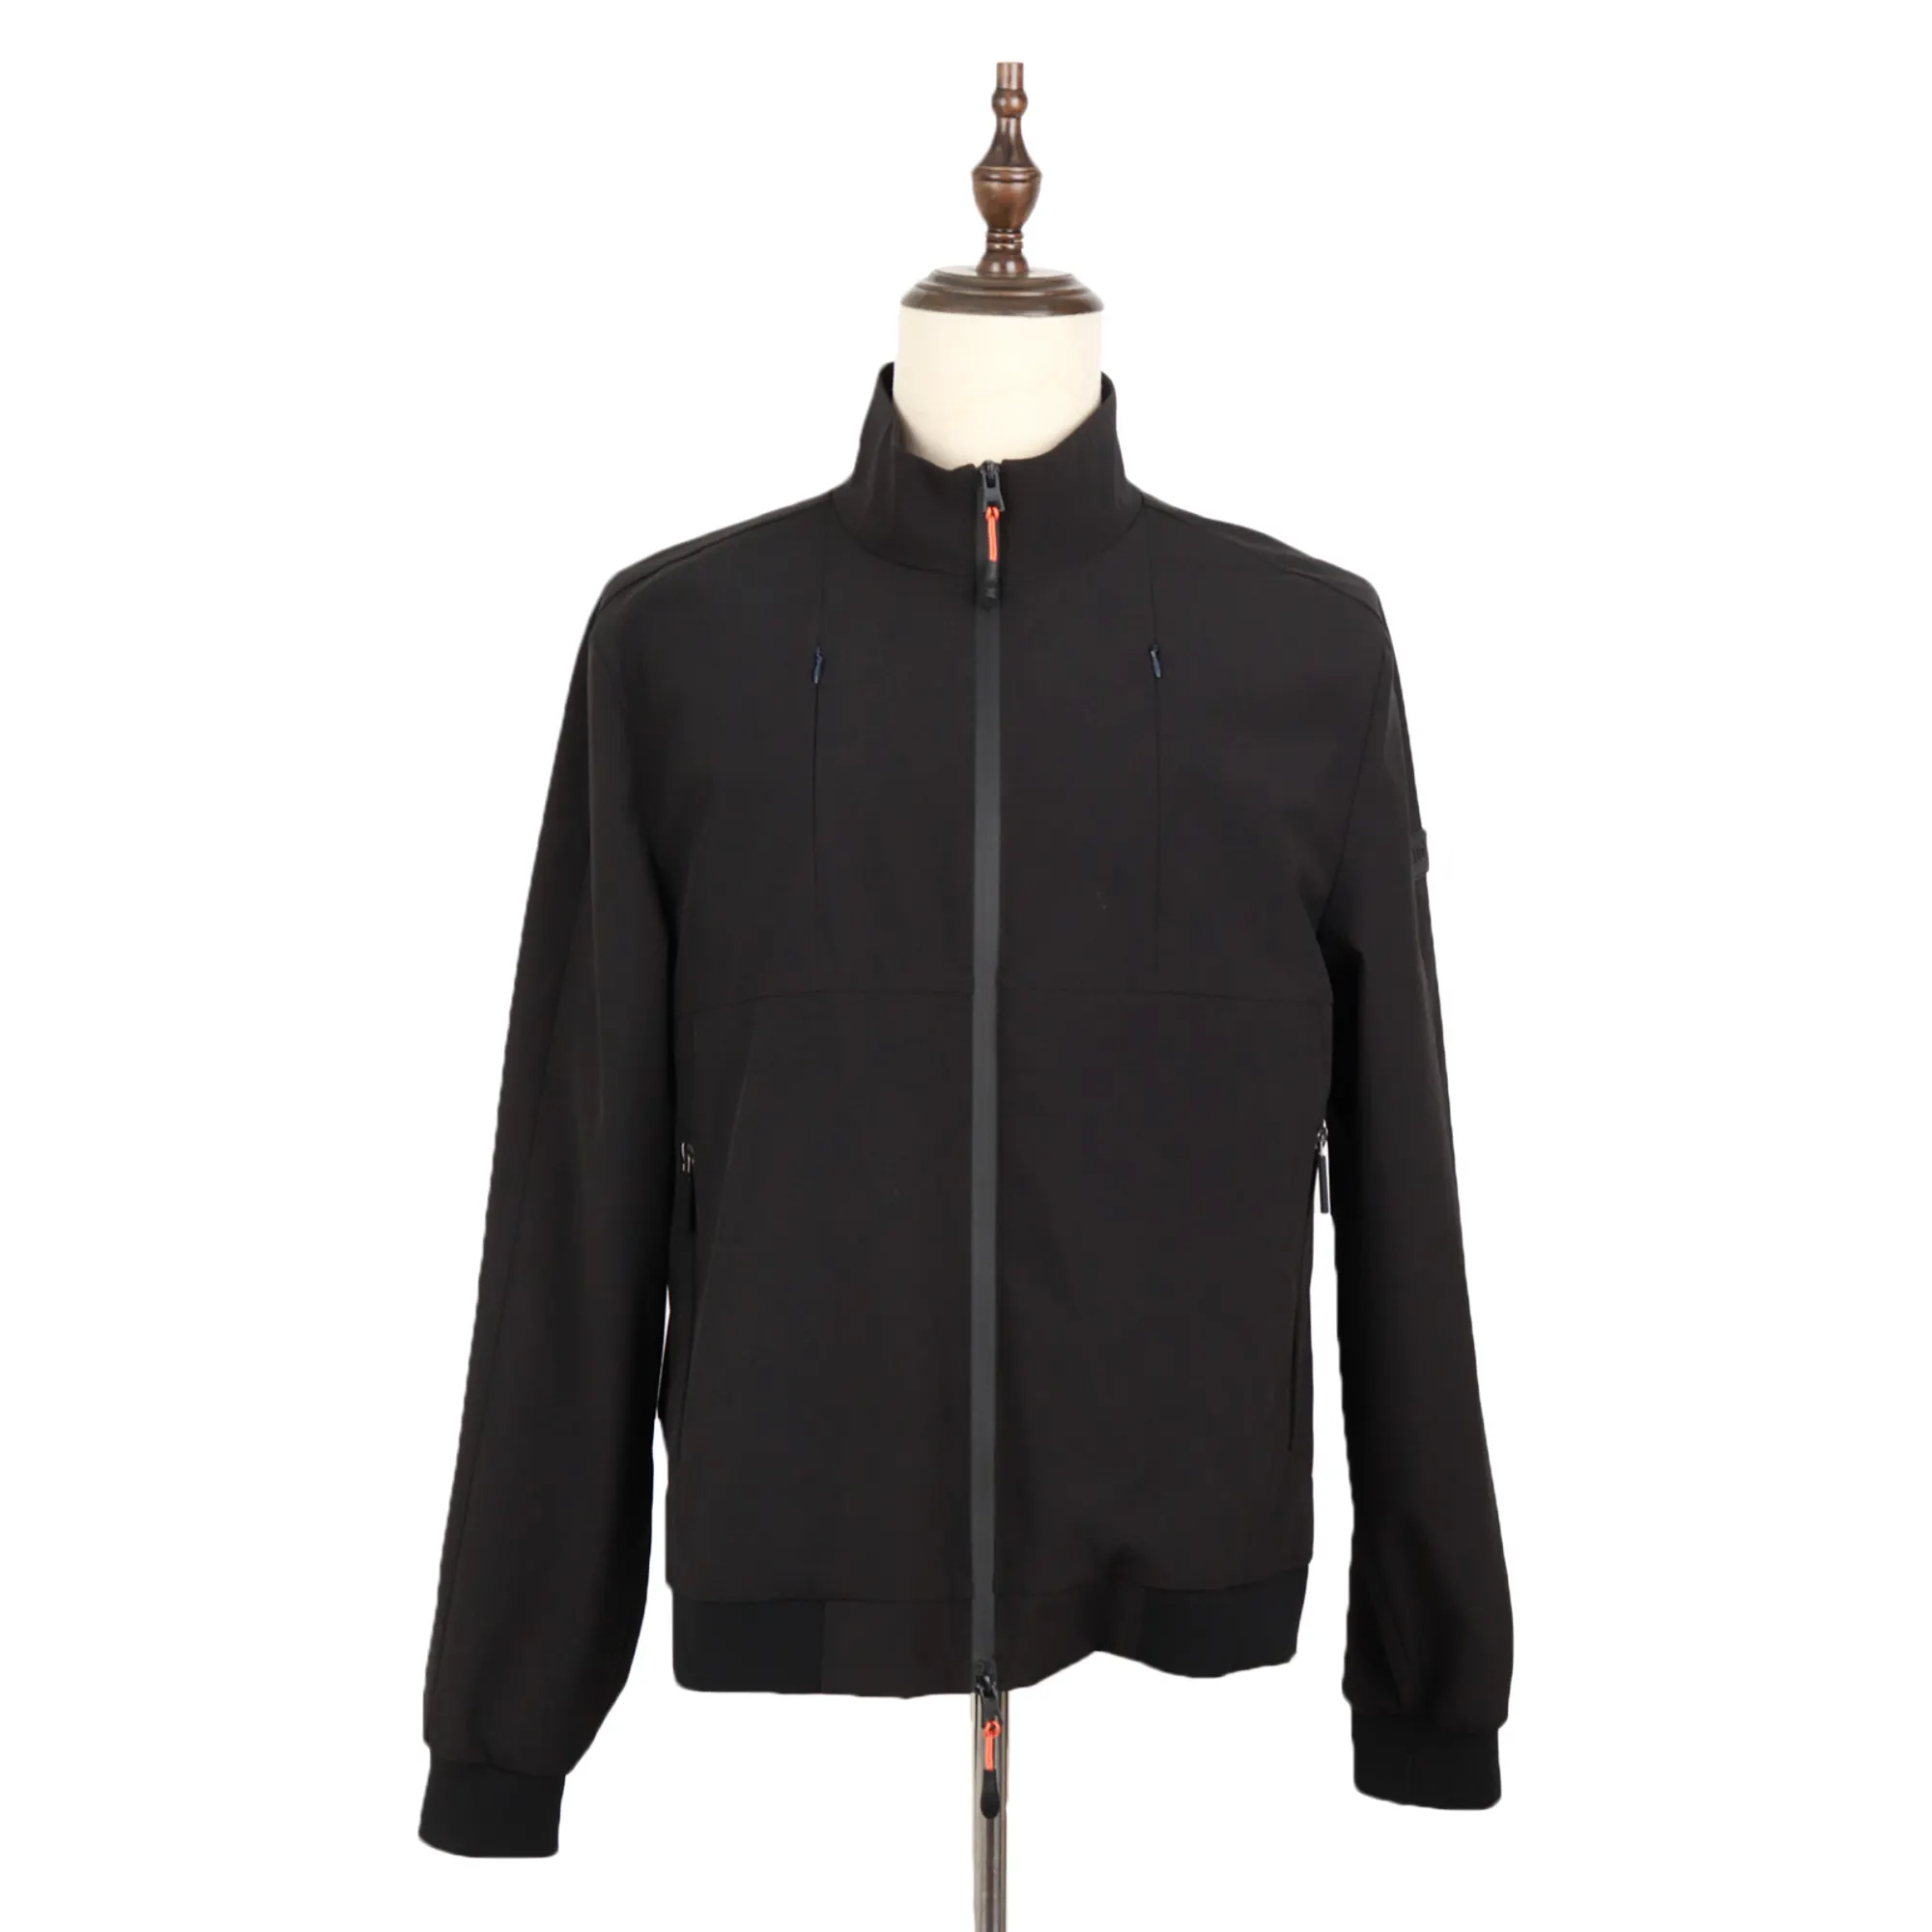 Alephan spring and autumn classic fashion black coats men's bomber suit jacket wholesale